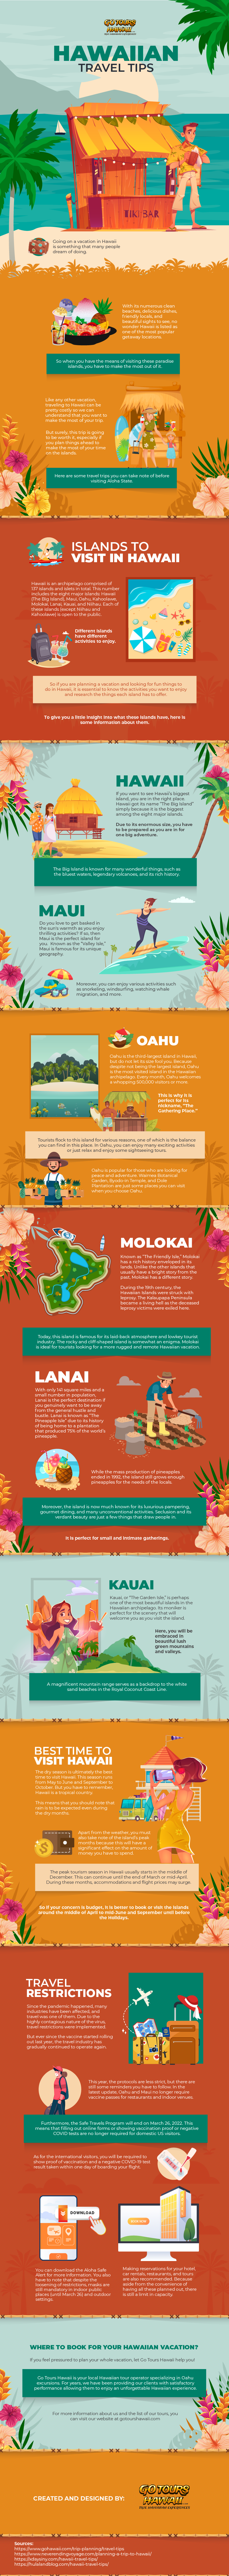 Hawaiian Travel Tips - Infographic ImageW#2032#^